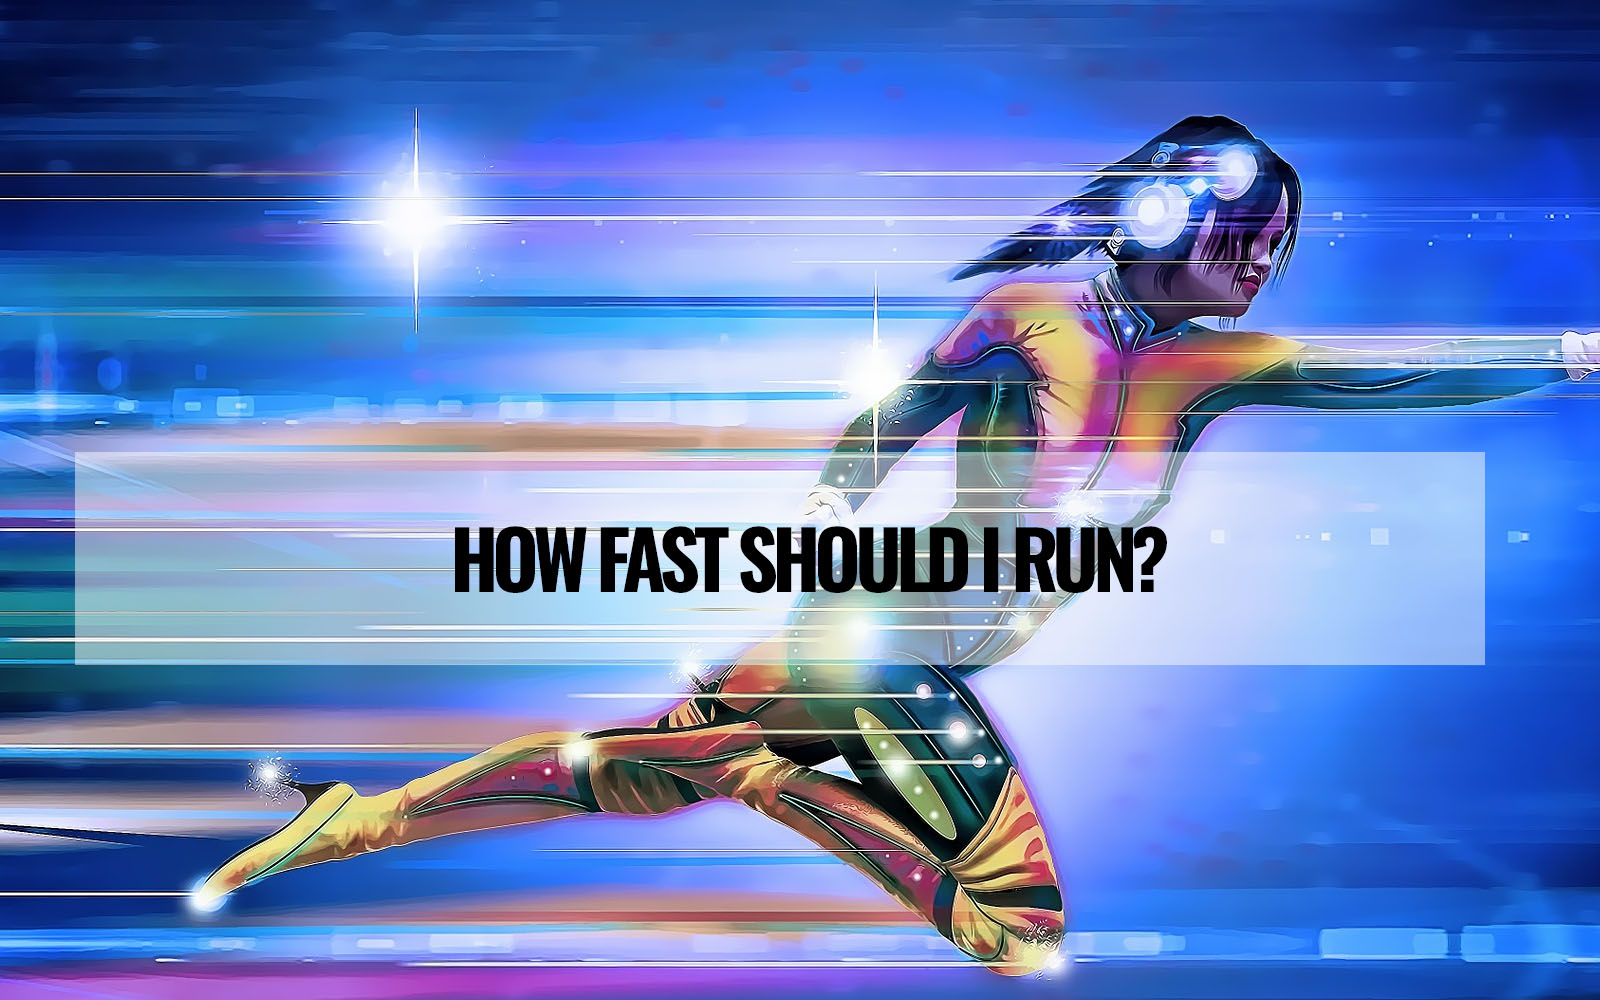 How fast should I run?